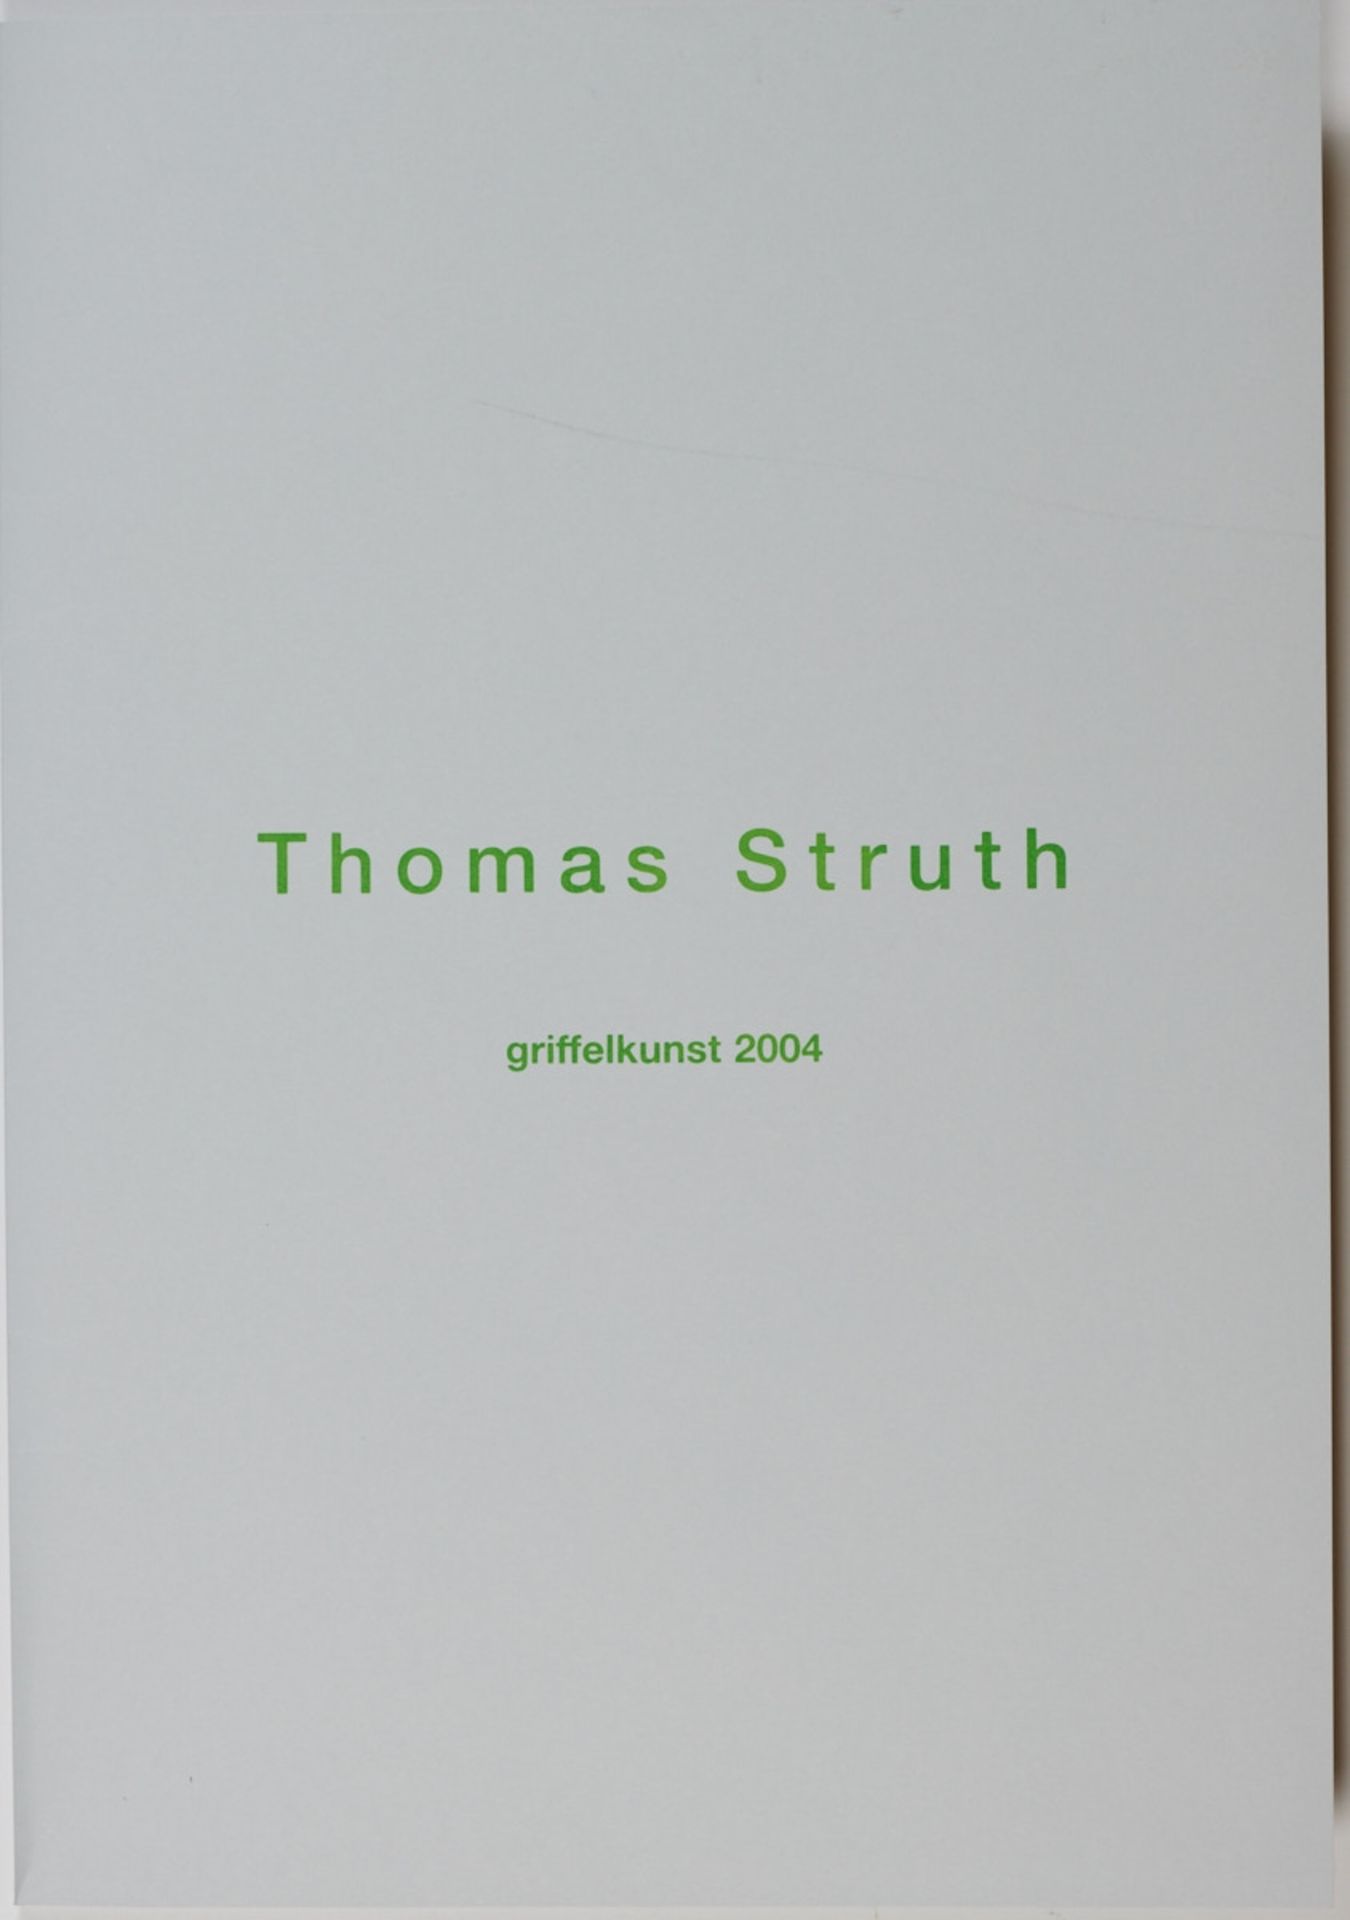 Thomas Struth - Image 8 of 9